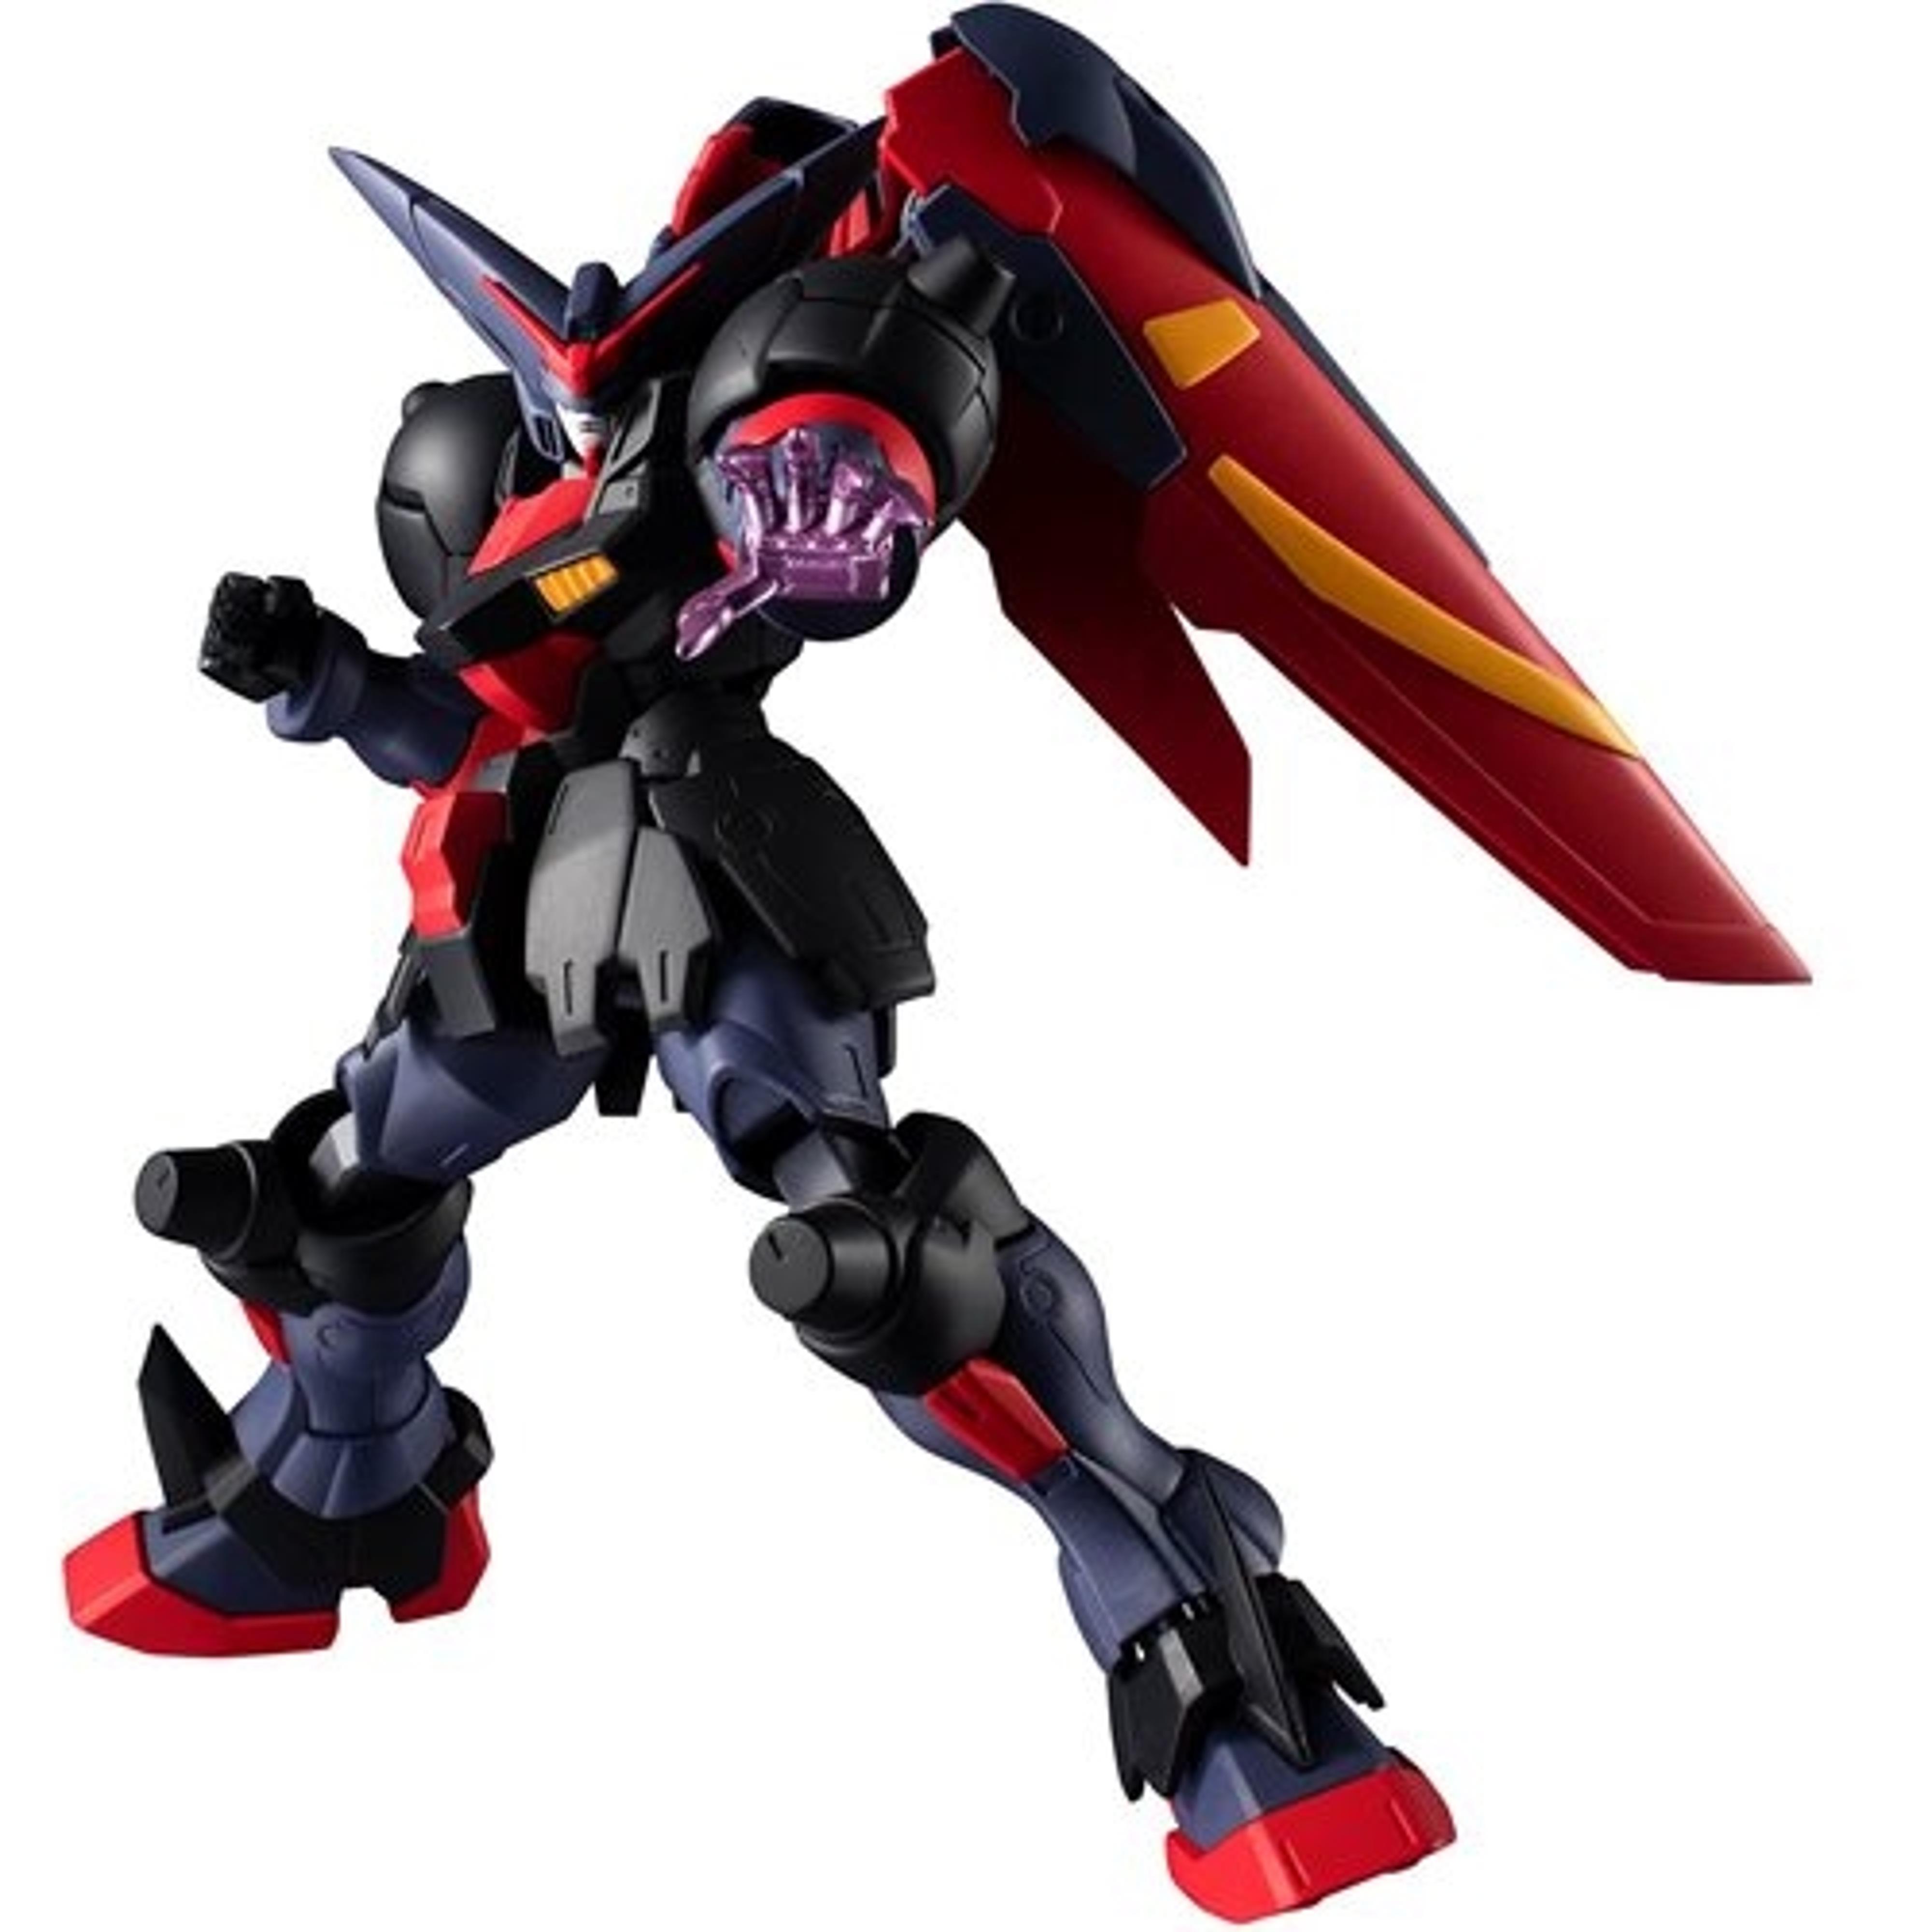 Bandai Master Gundam GF13-001 NHII Action Figure GU-19